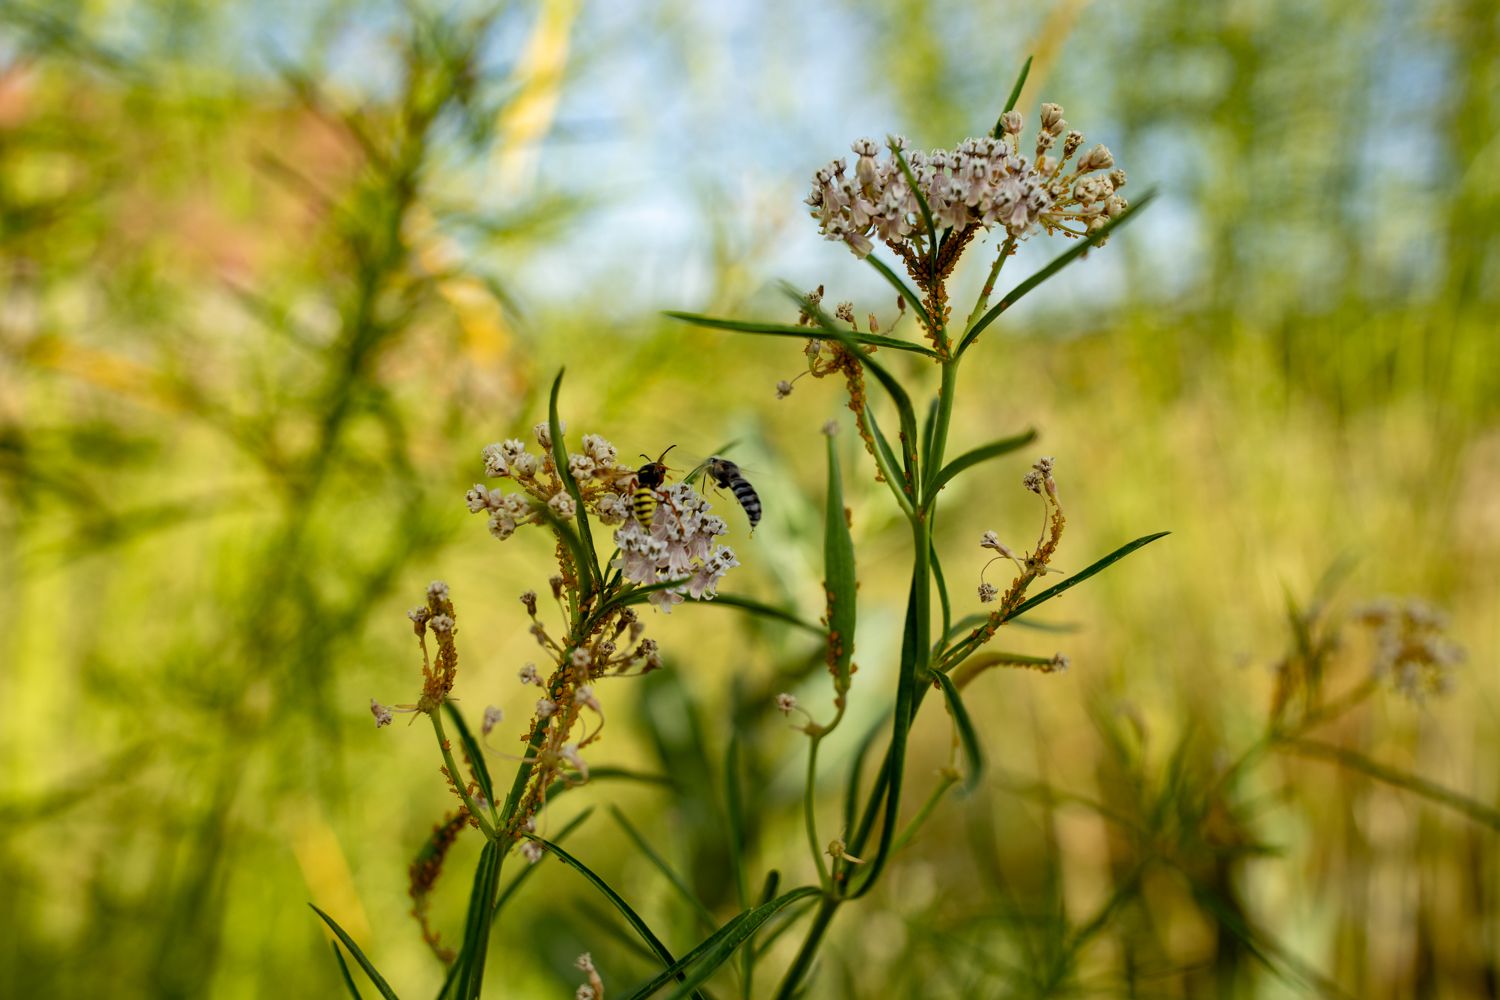 Closeup image of pollinator plants